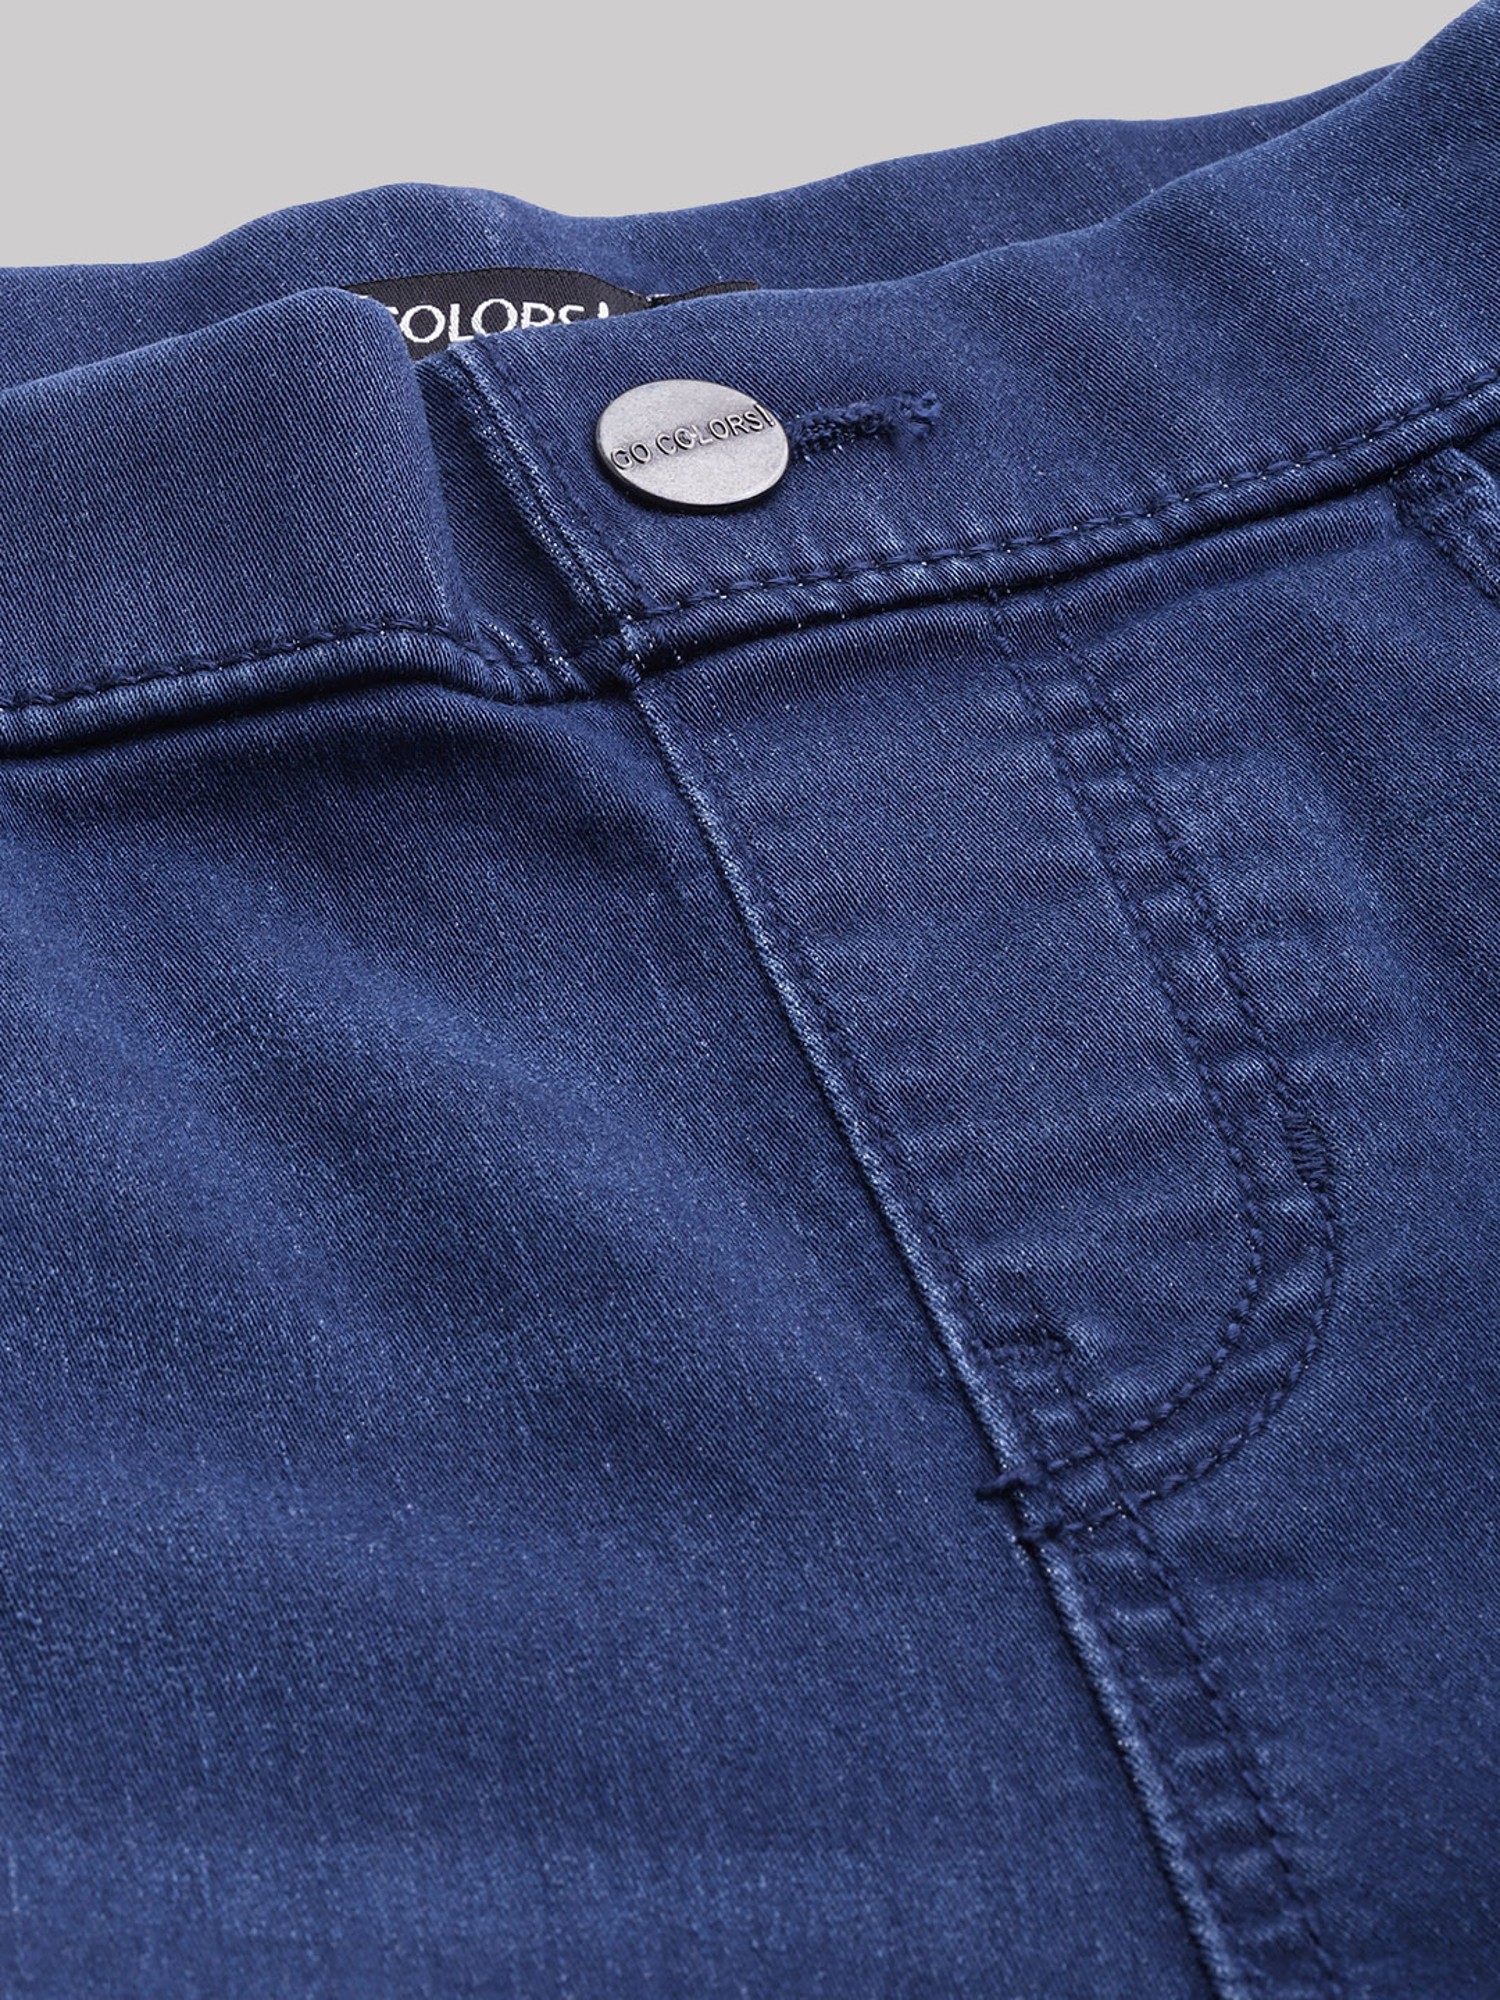 Buy GO COLORS Store Women Dark Blue Denim Jeans (26) Online at Best Prices  in India - JioMart.